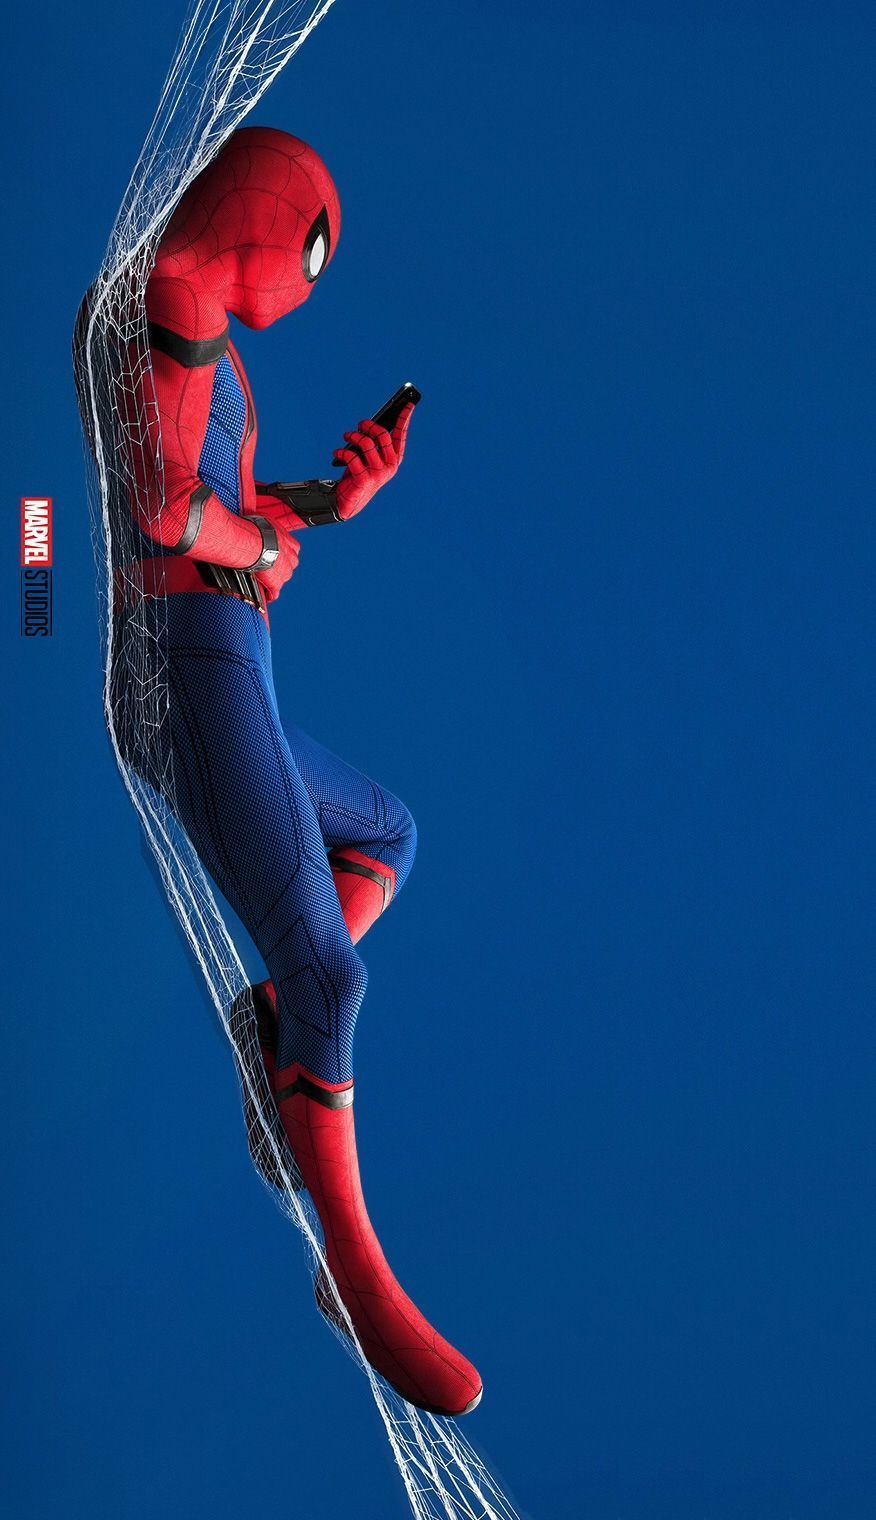 Spider Man Spider Man: Homecoming Avengers: Infinity War Avengers: Endgame #Marvel #MCU #Spiderman #Ave. Avengers Personnages, Fond D'écran Avengers, Héros Marvel